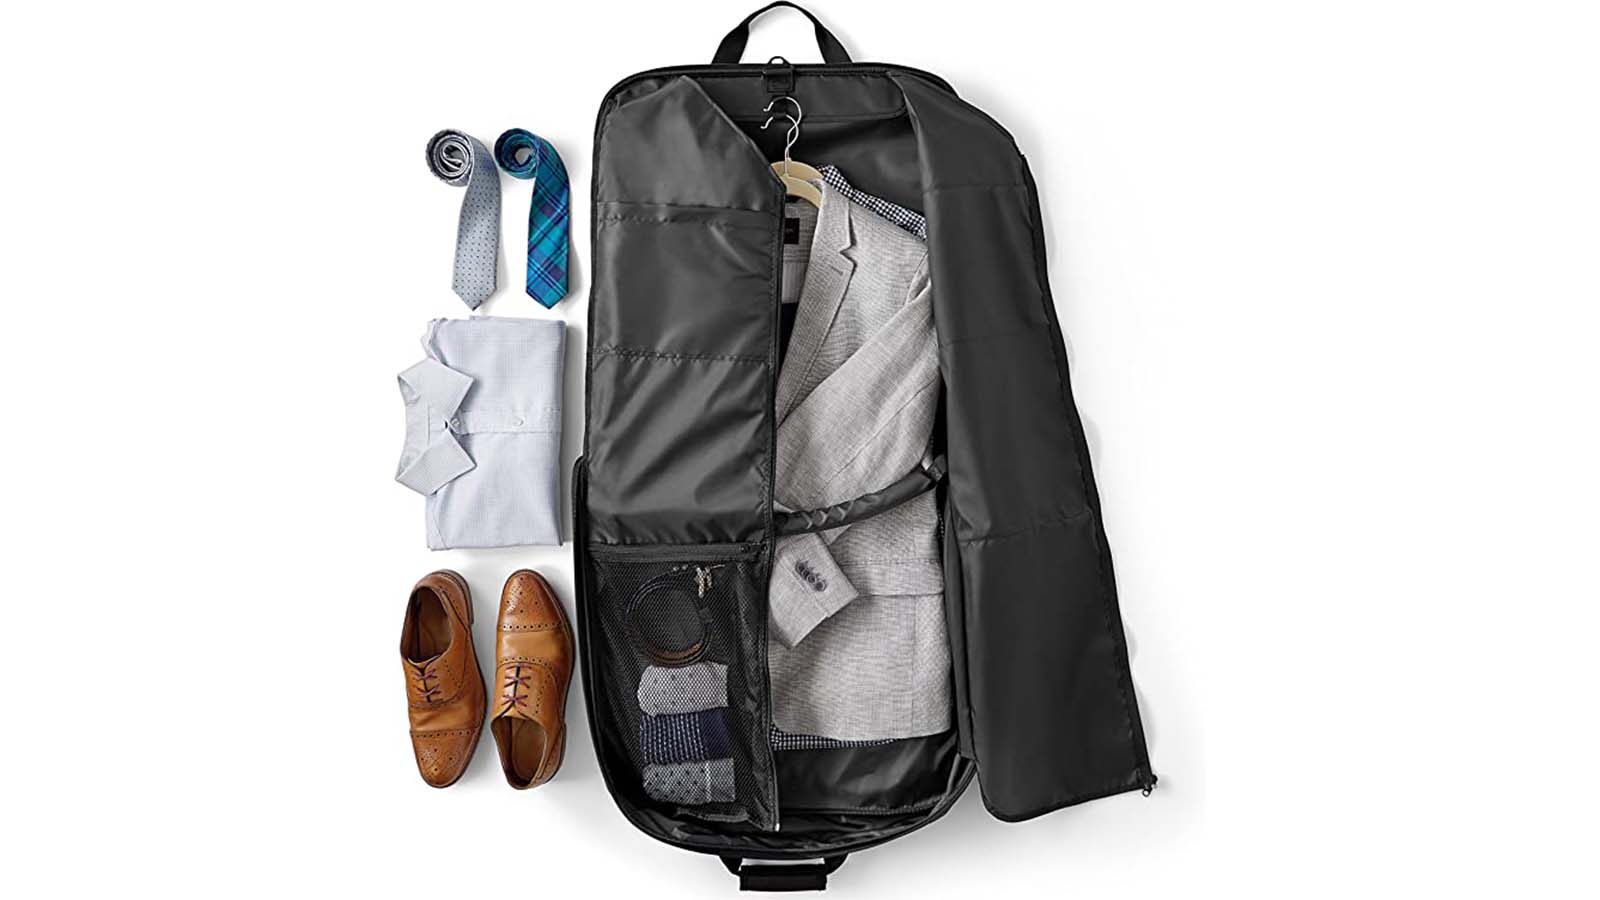 60” Premium Tri-Fold Travel Garment Bag with Pocket